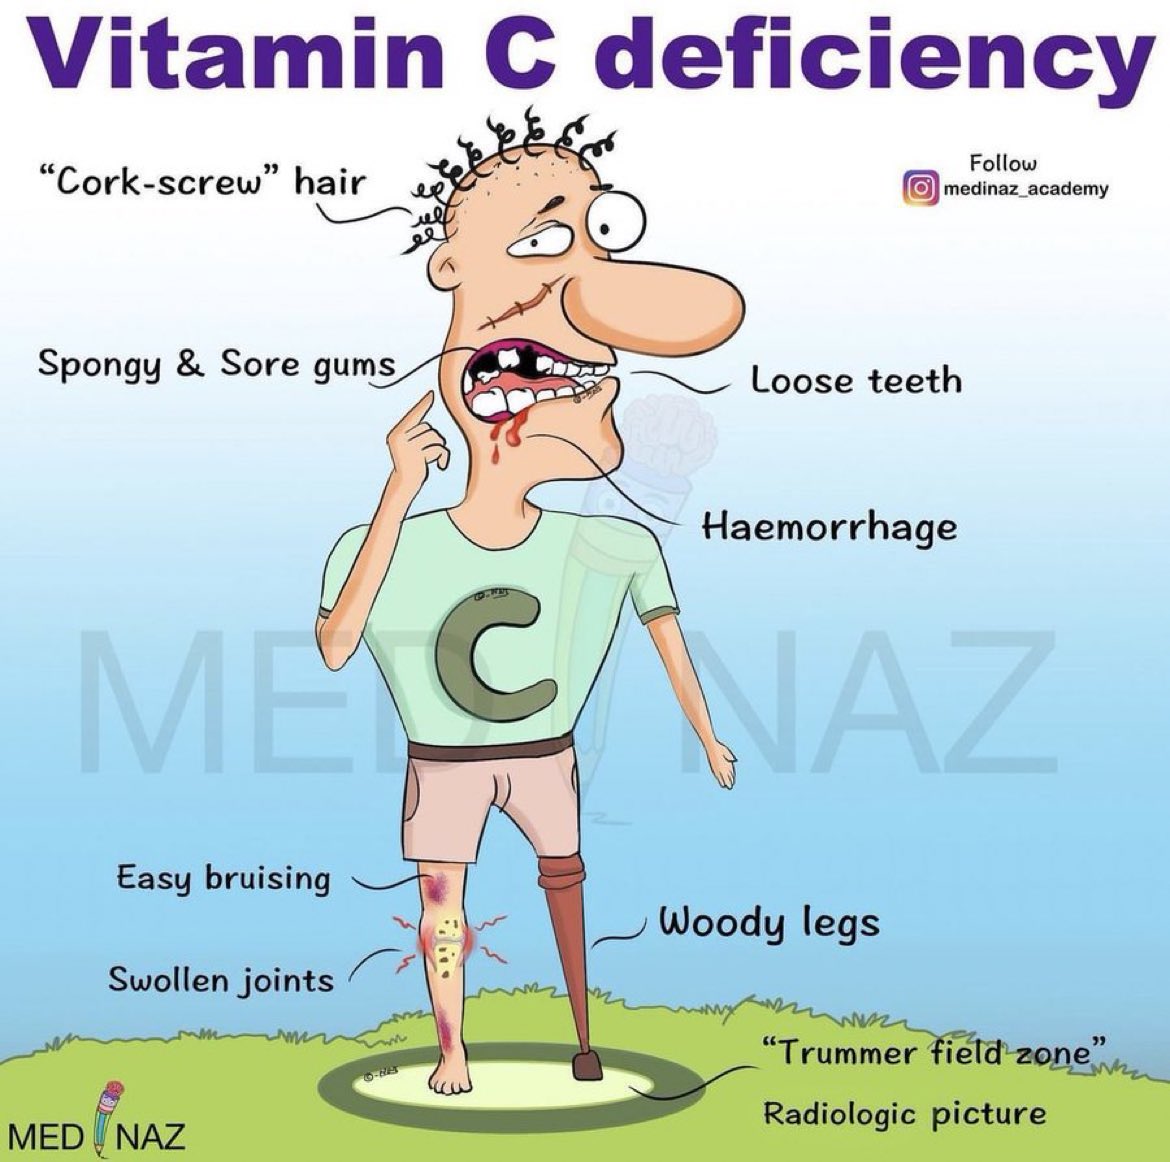 Vitamin C deficiency #MedEd #FOAMed #Vitamins #Nutrition #Dietitian Credit: medinaz_academy